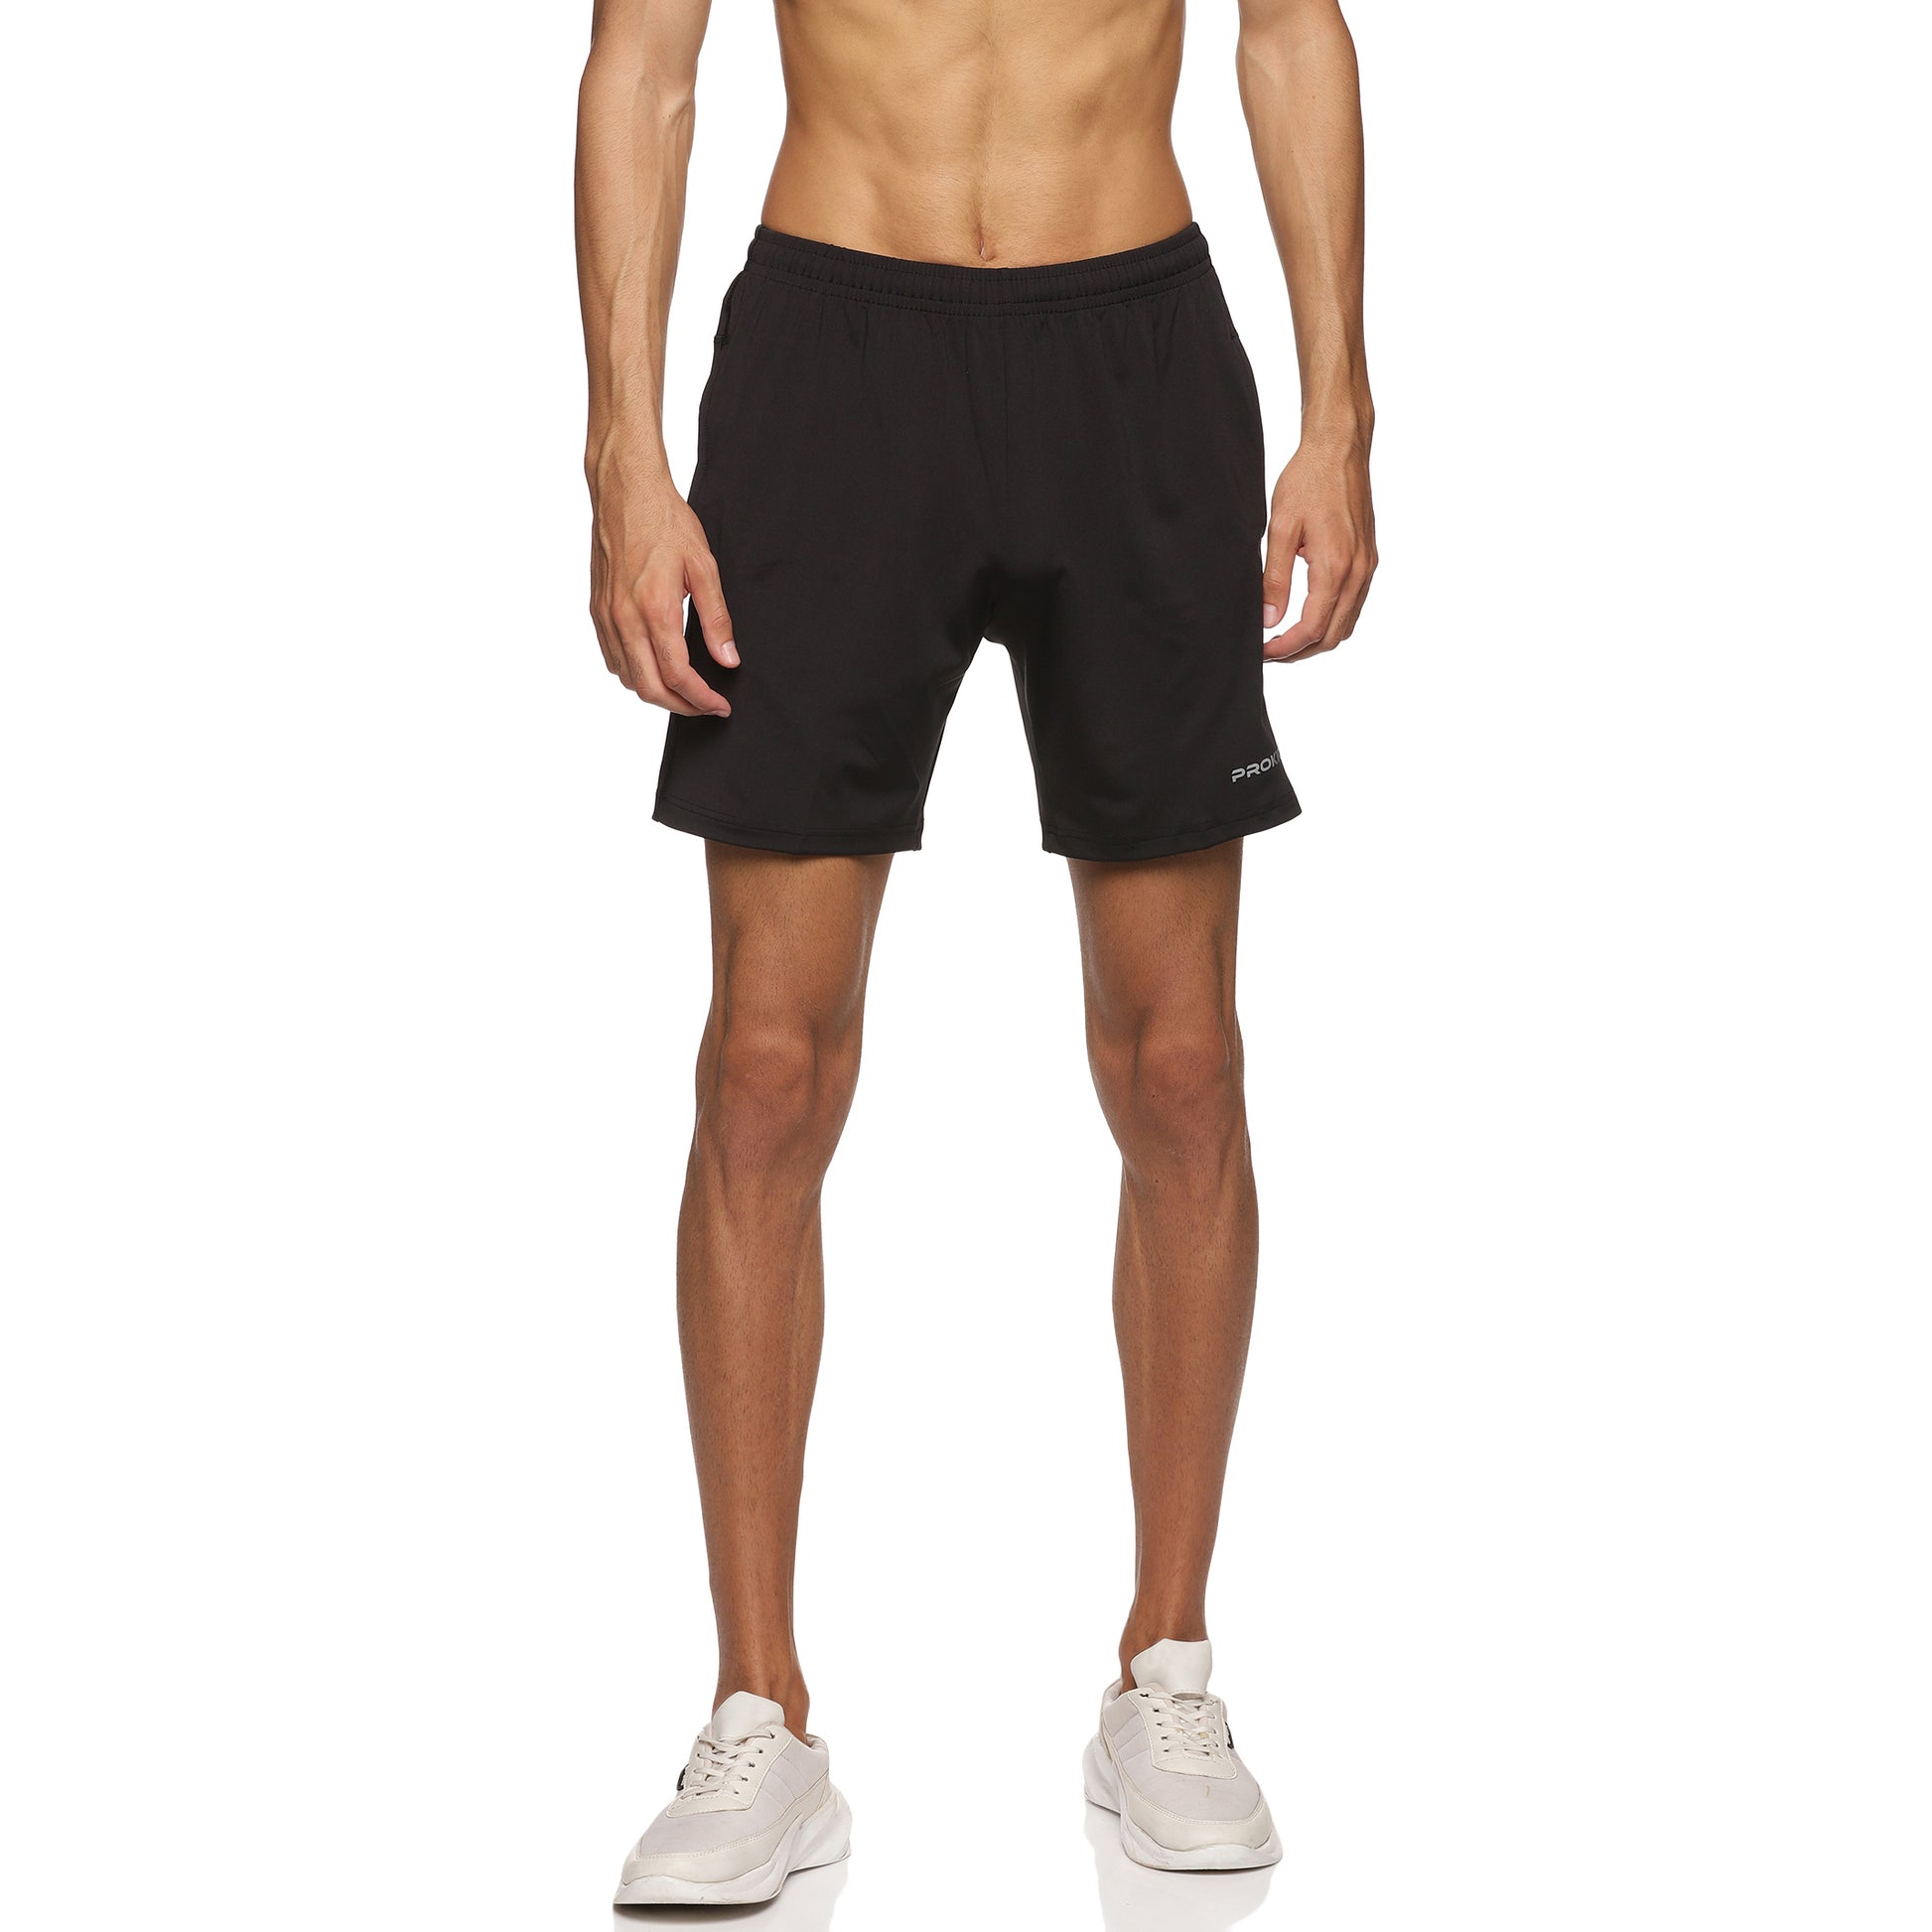 Prokick Lycra Sports Shorts for Men, Black - Best Price online Prokicksports.com